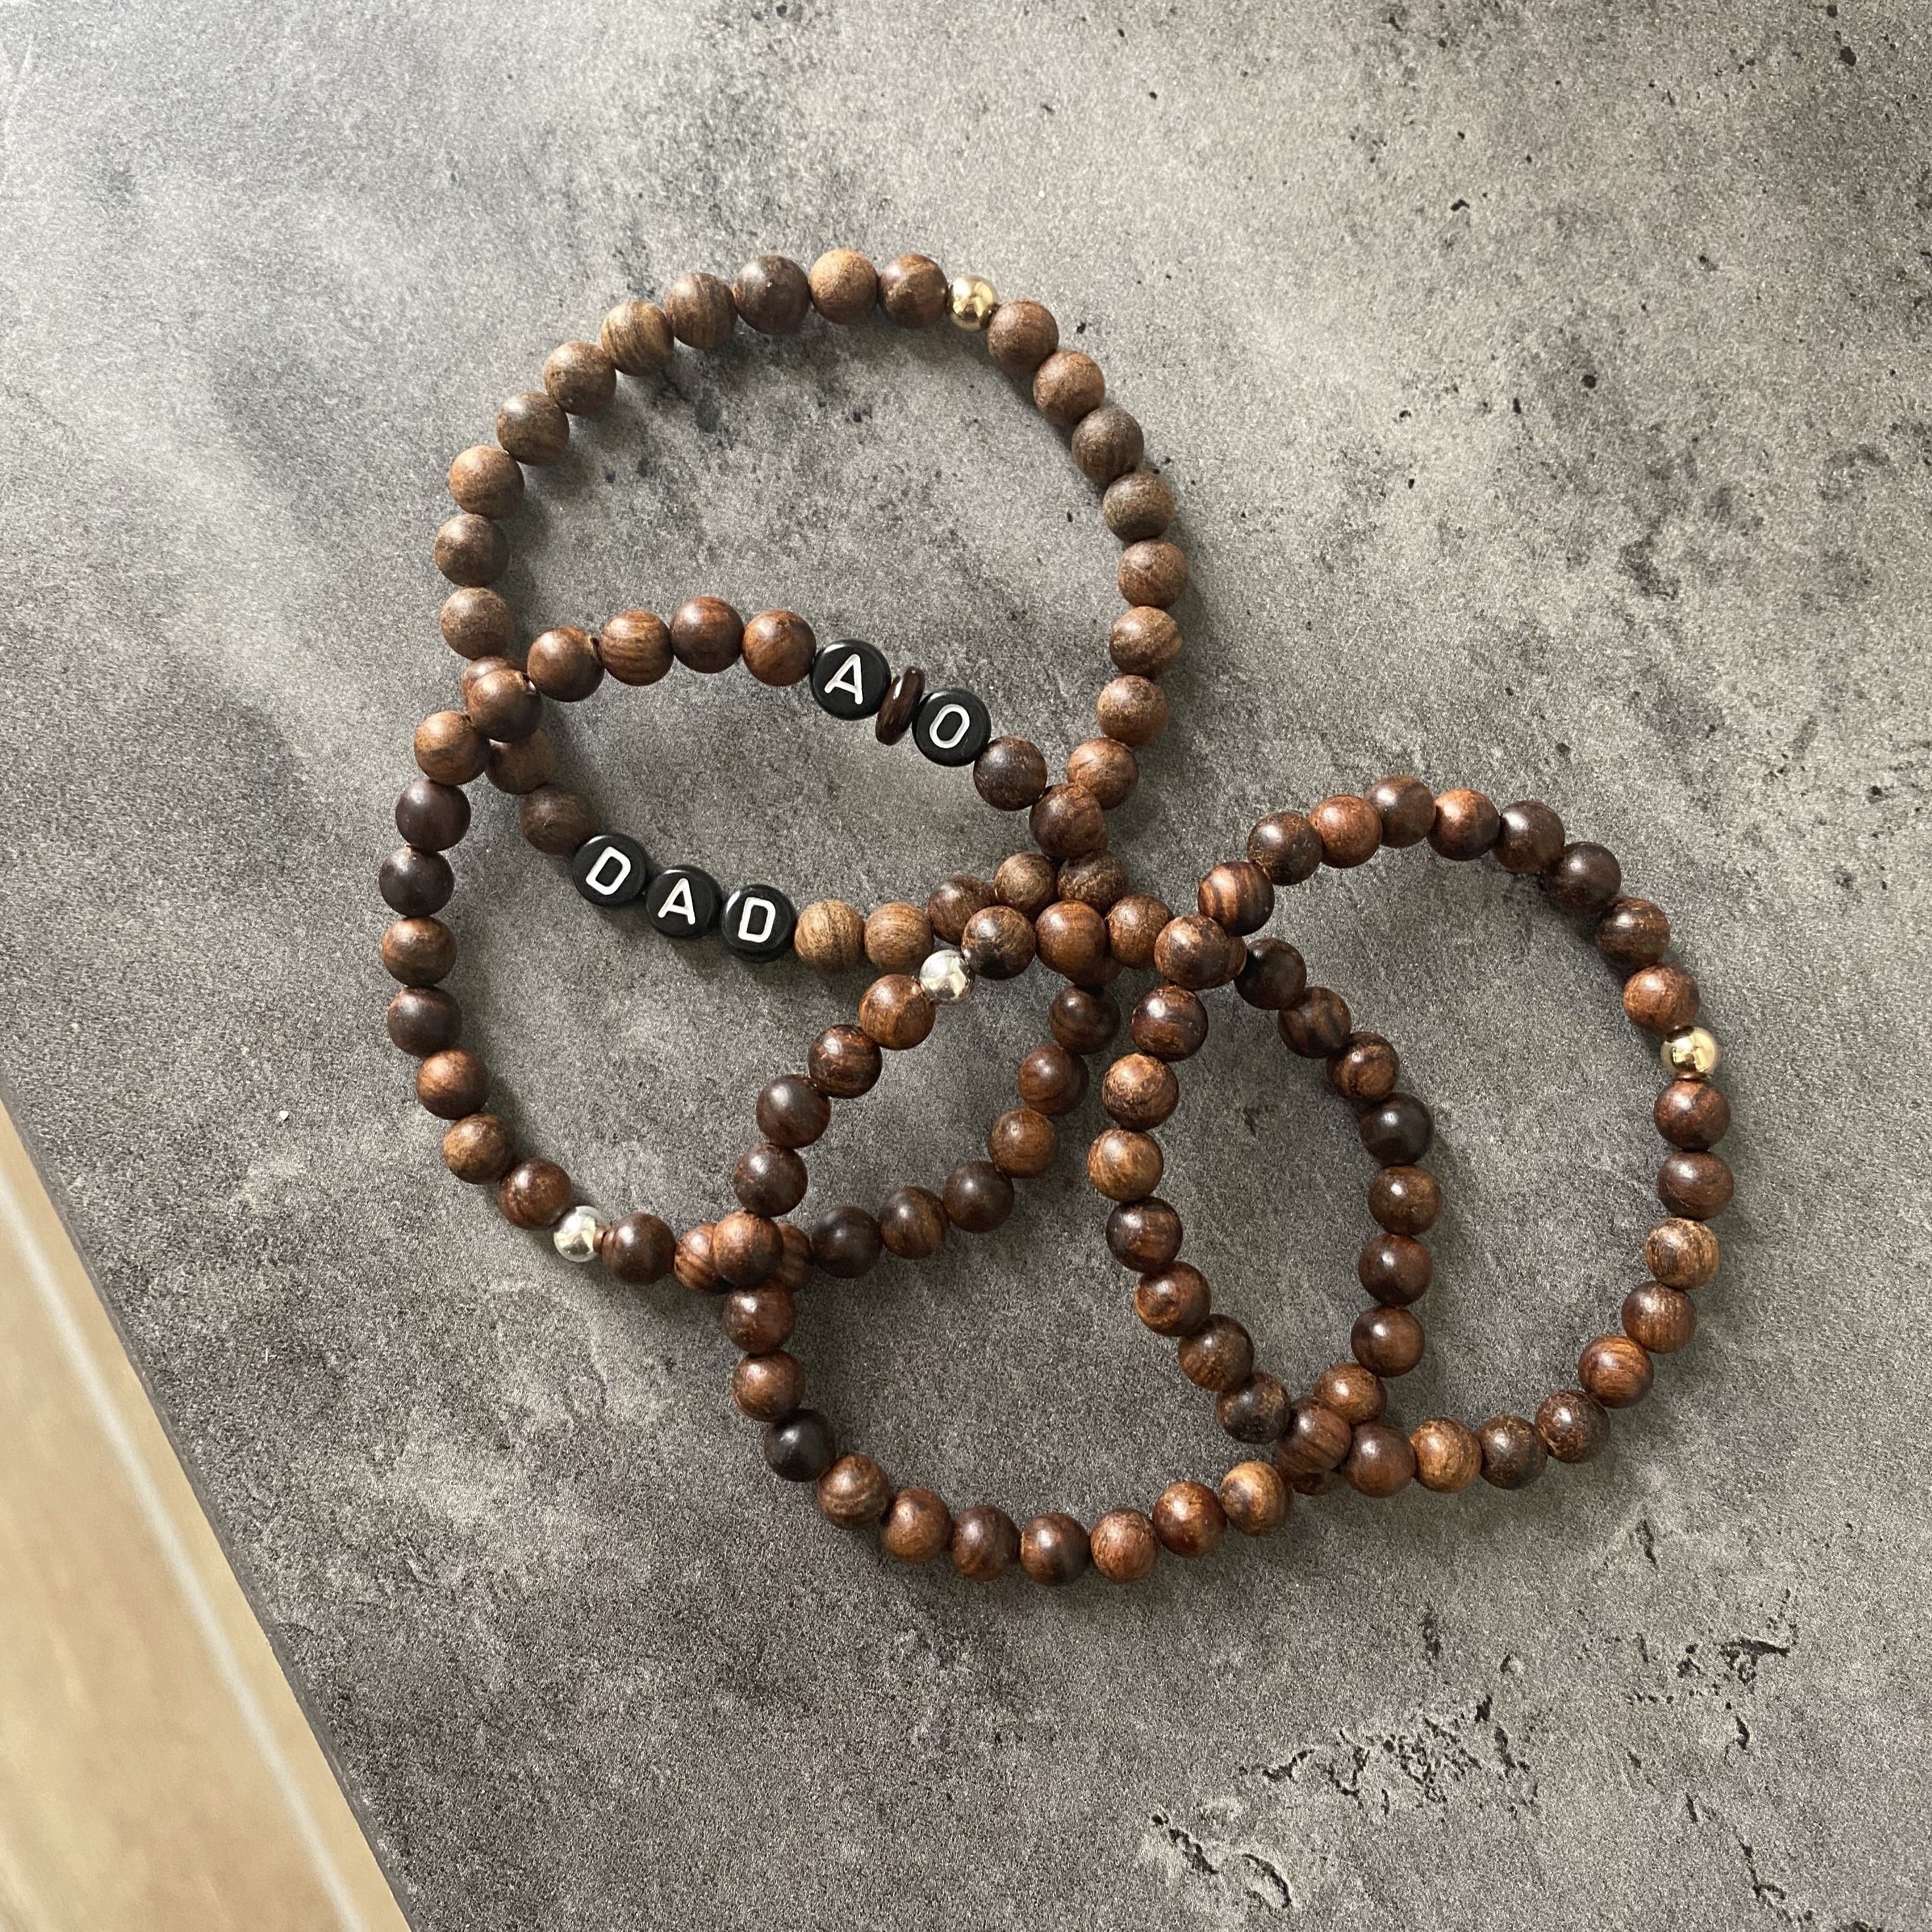 Personalised men's wooden bead bracelet